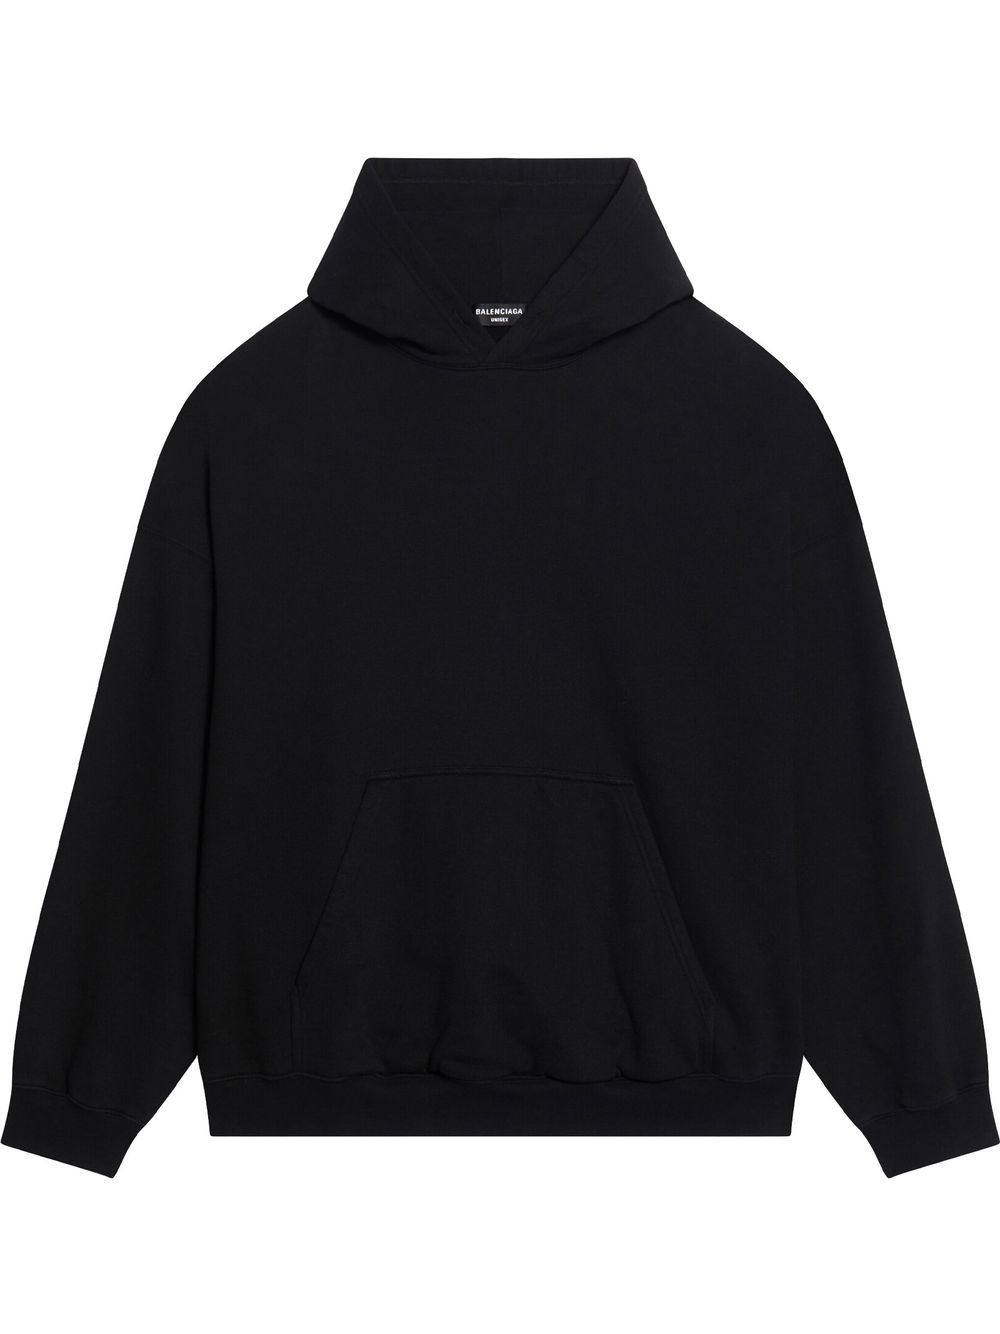 Balenciaga Apparel Rentals oversized hoodie - Black